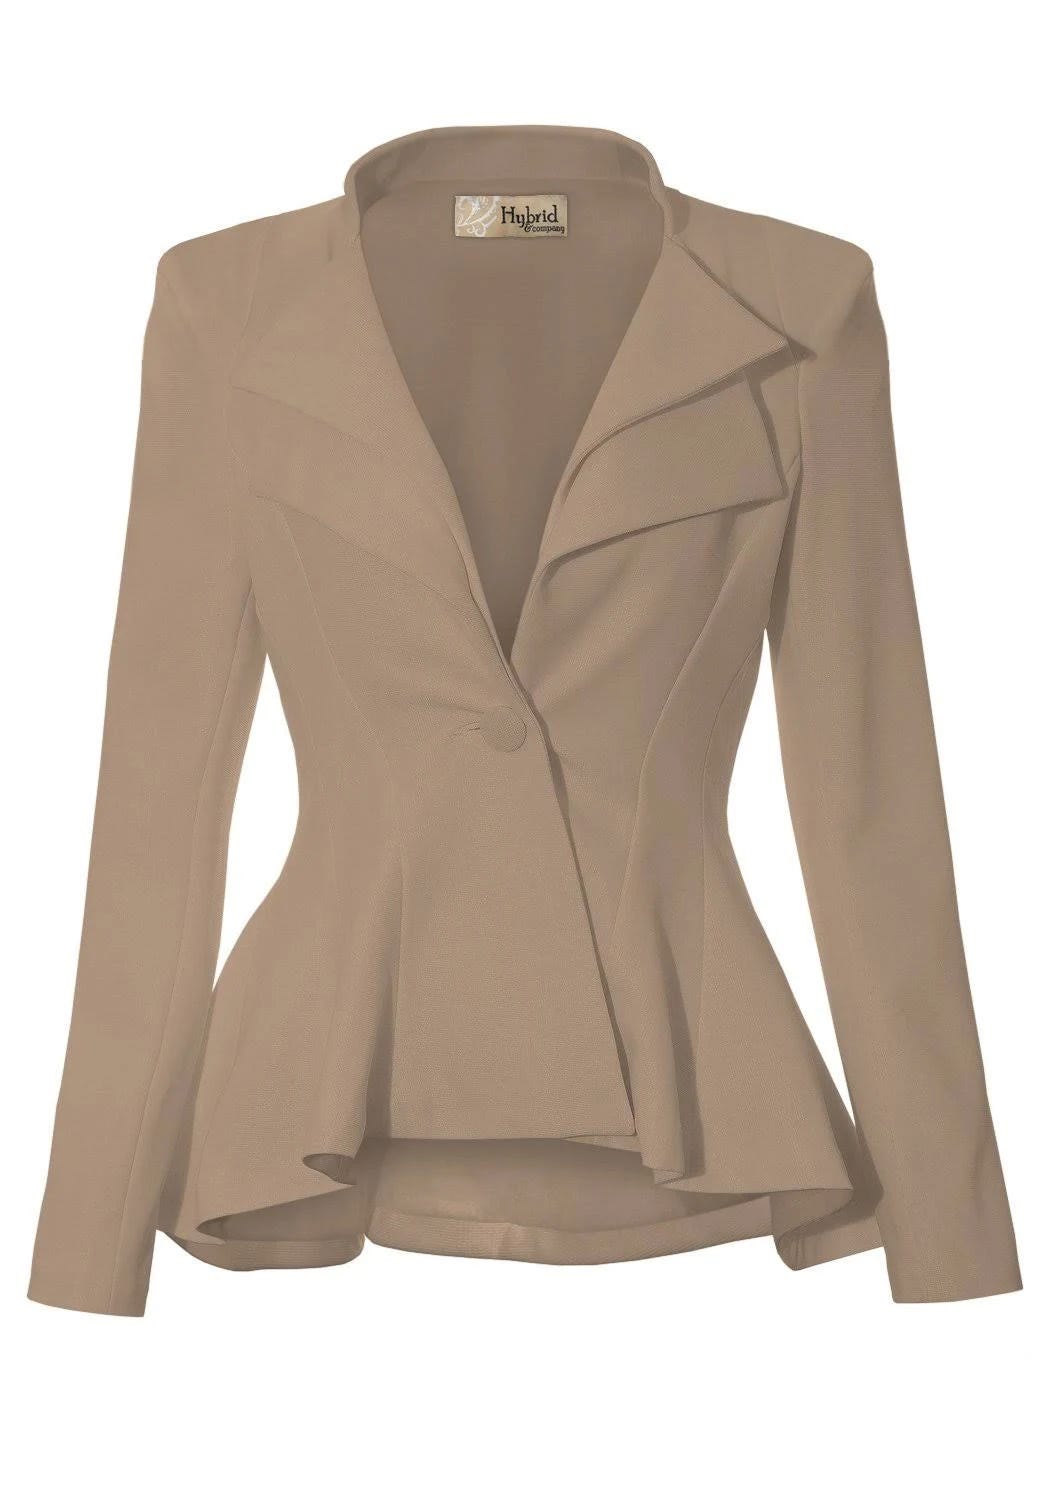 Versatile Women's Blazer Jacket for Work or Casual Wear | Image